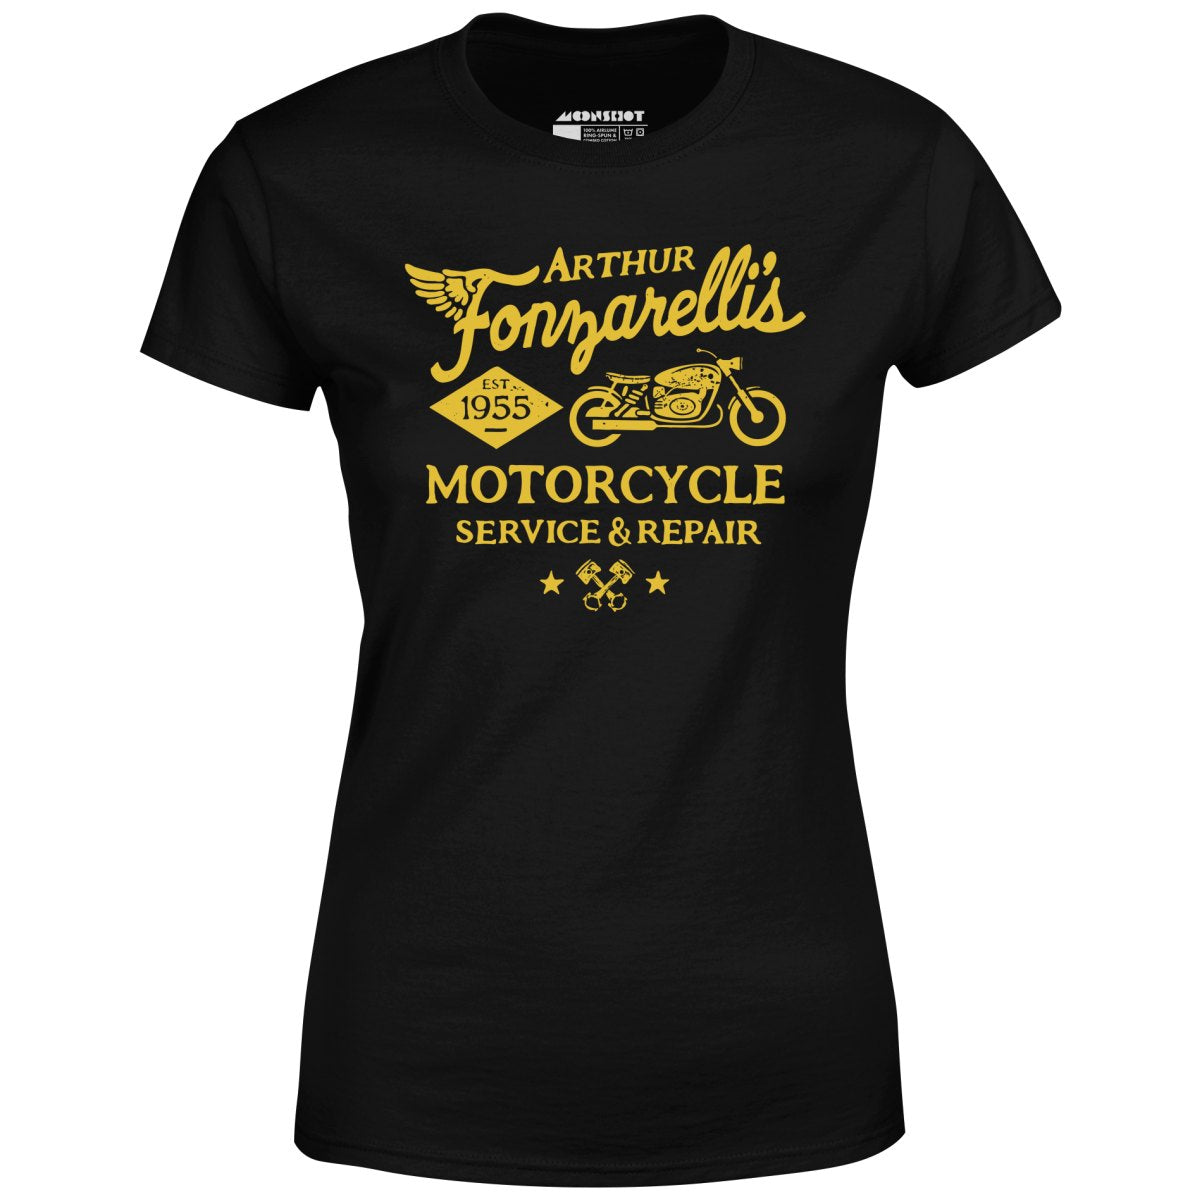 Arthur Fonzarelli's Motorcycle Service & Repair - Women's T-Shirt